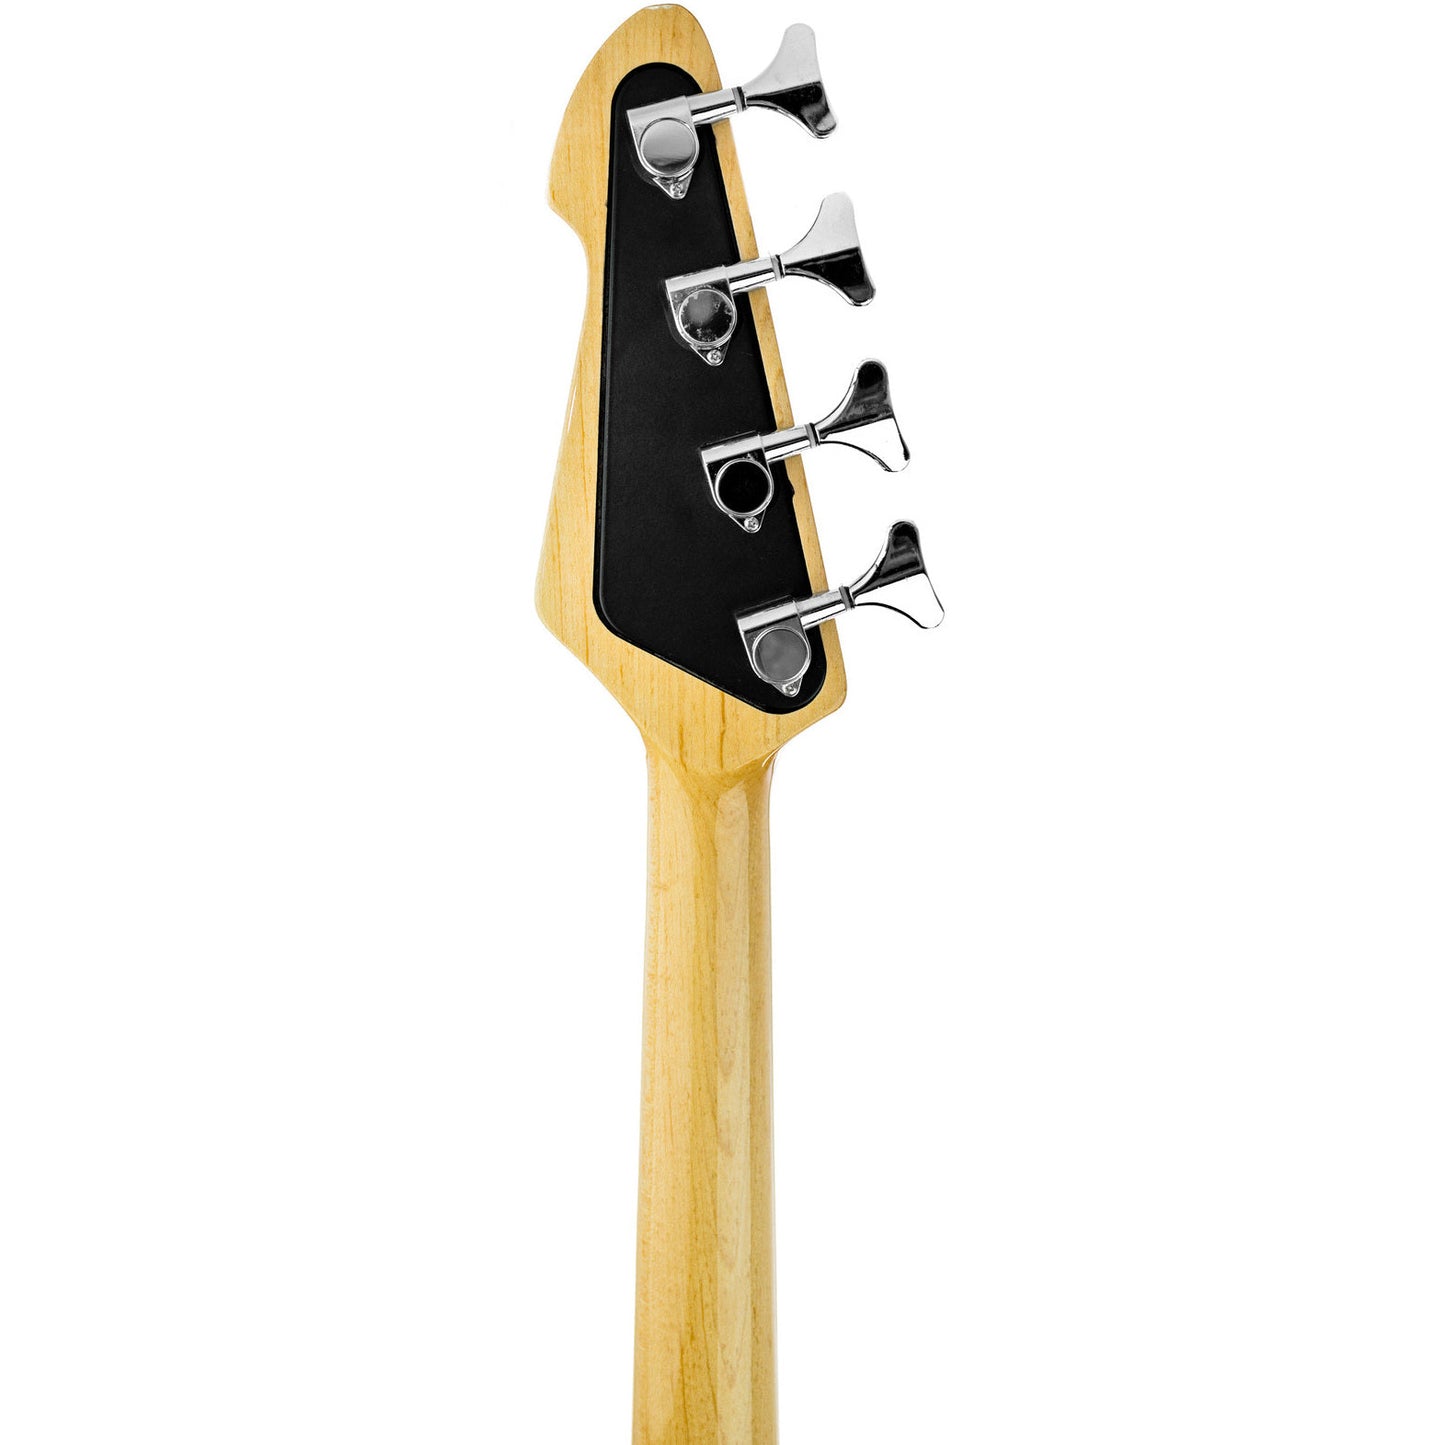 Peavey Milestone Series 4 String Bass Guitar in Natural